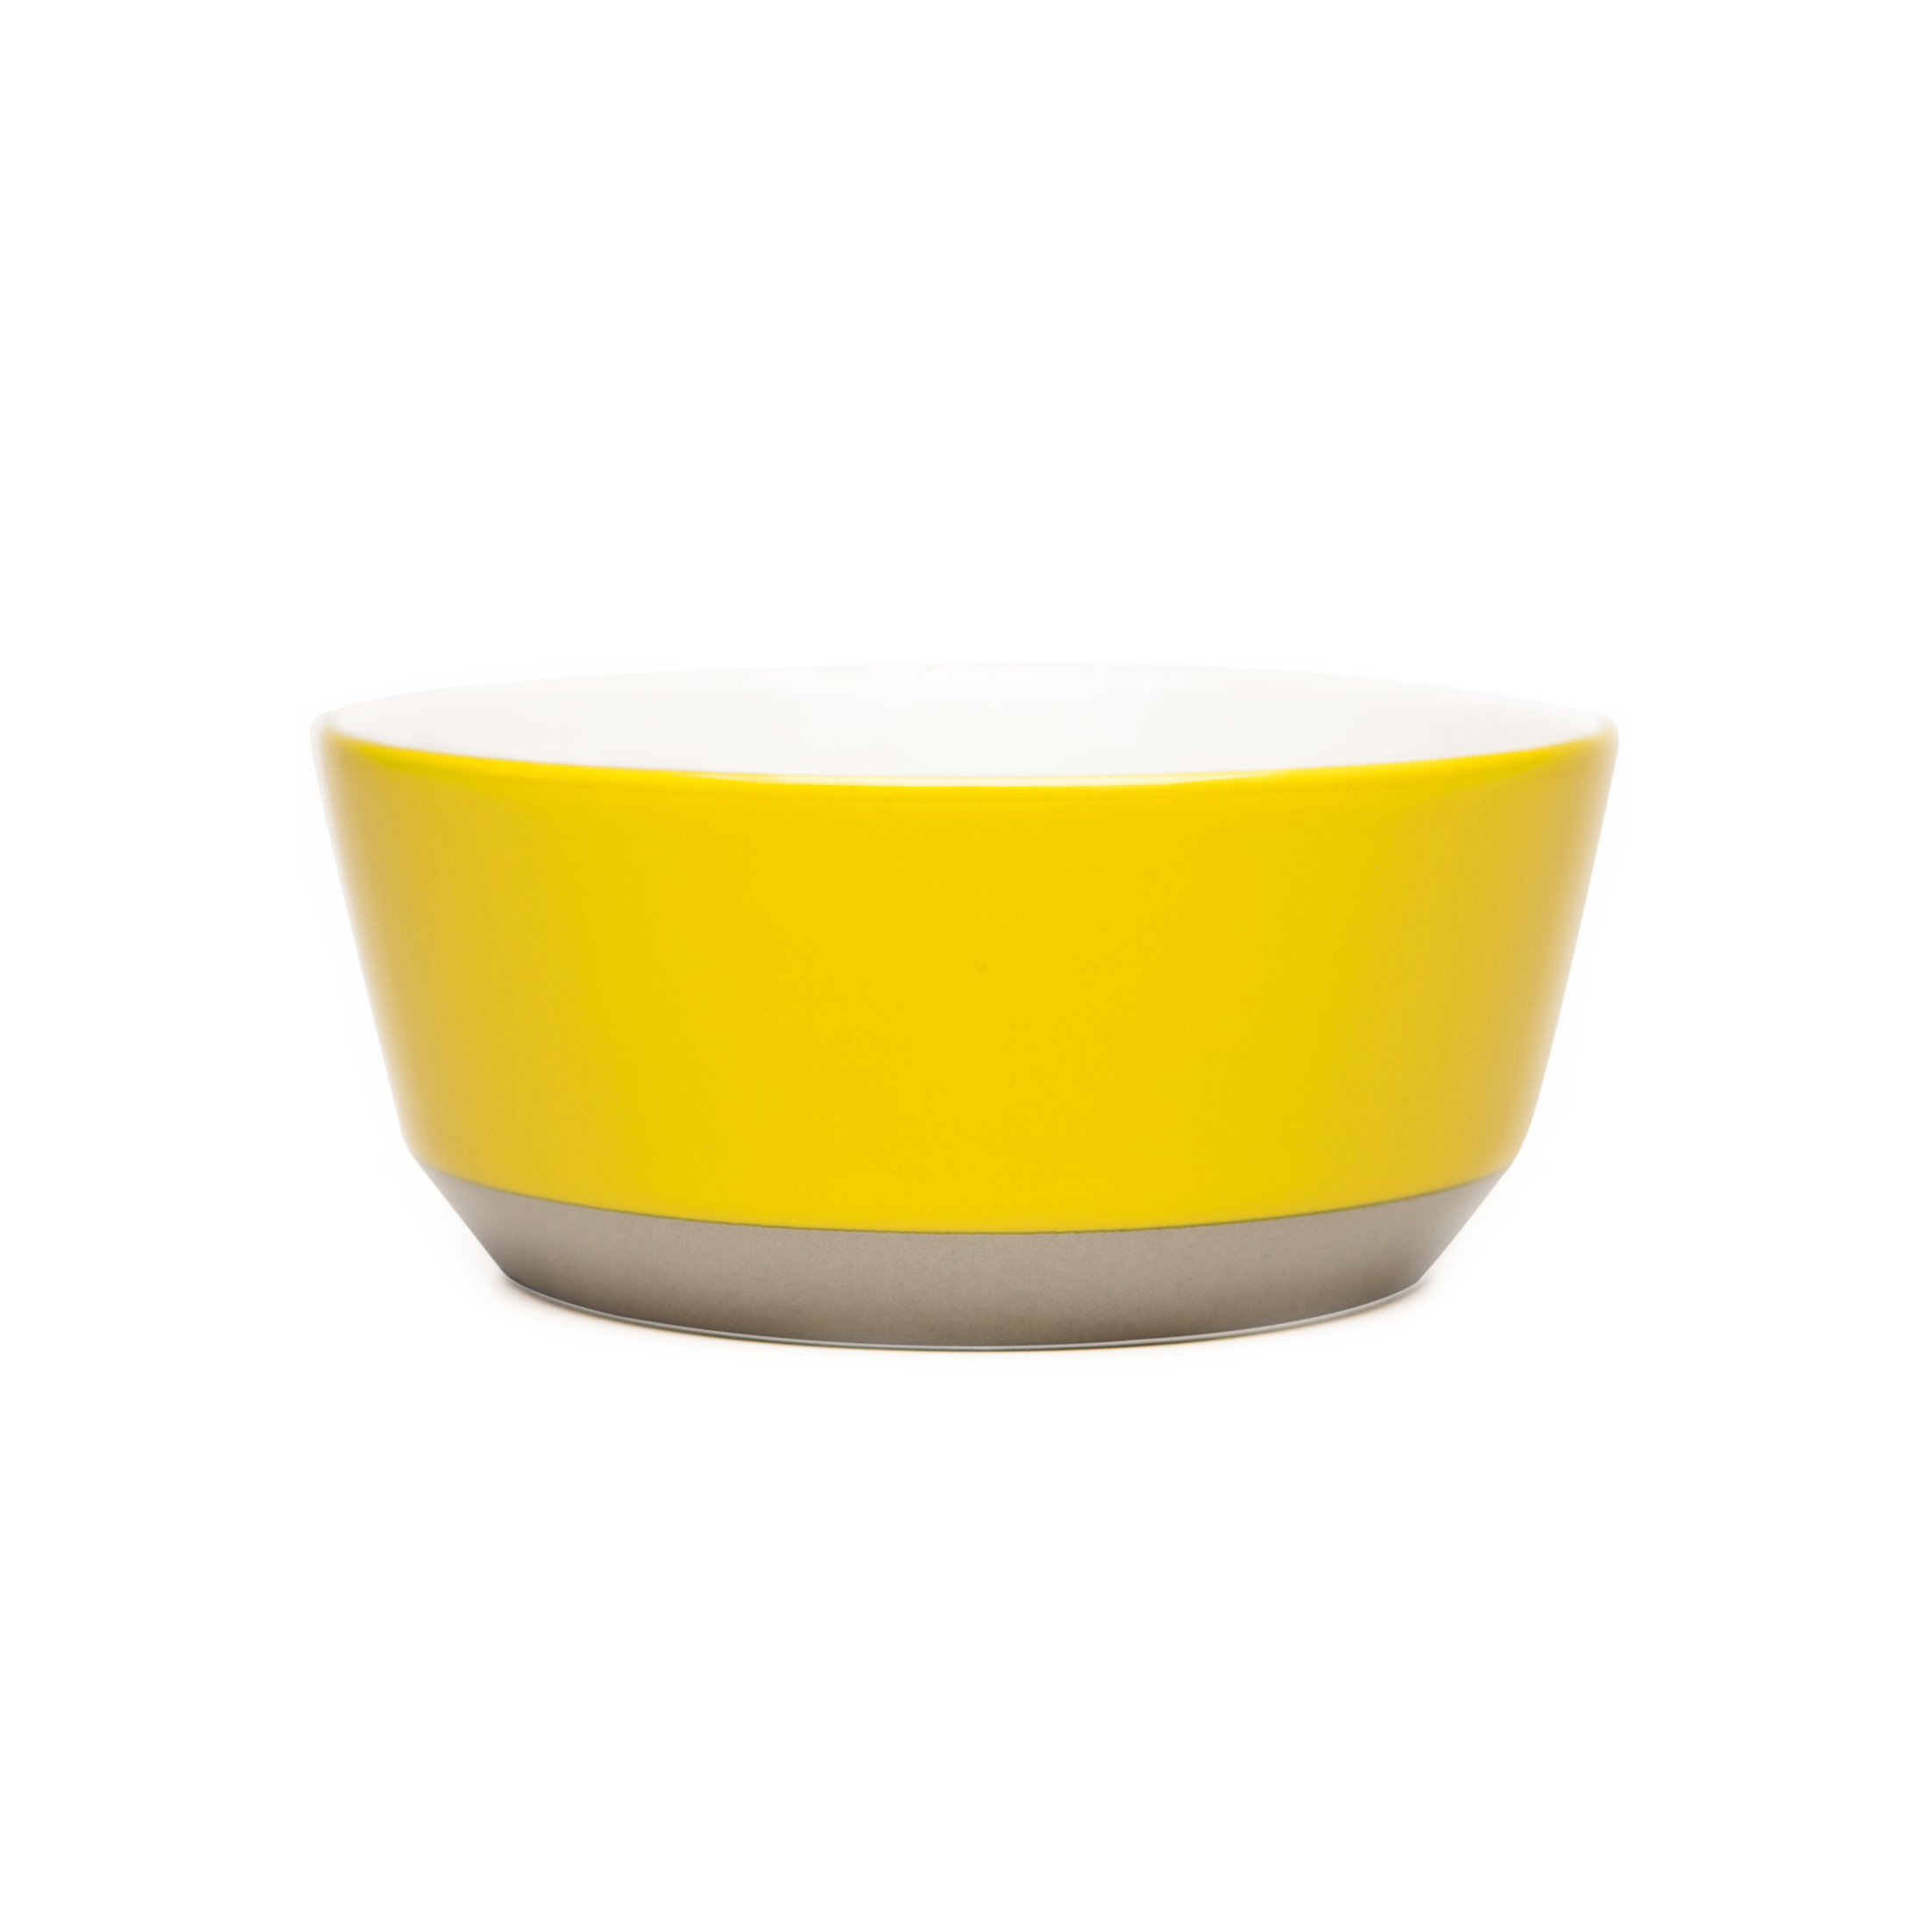 JC1185 My Bowl yellow, light grey